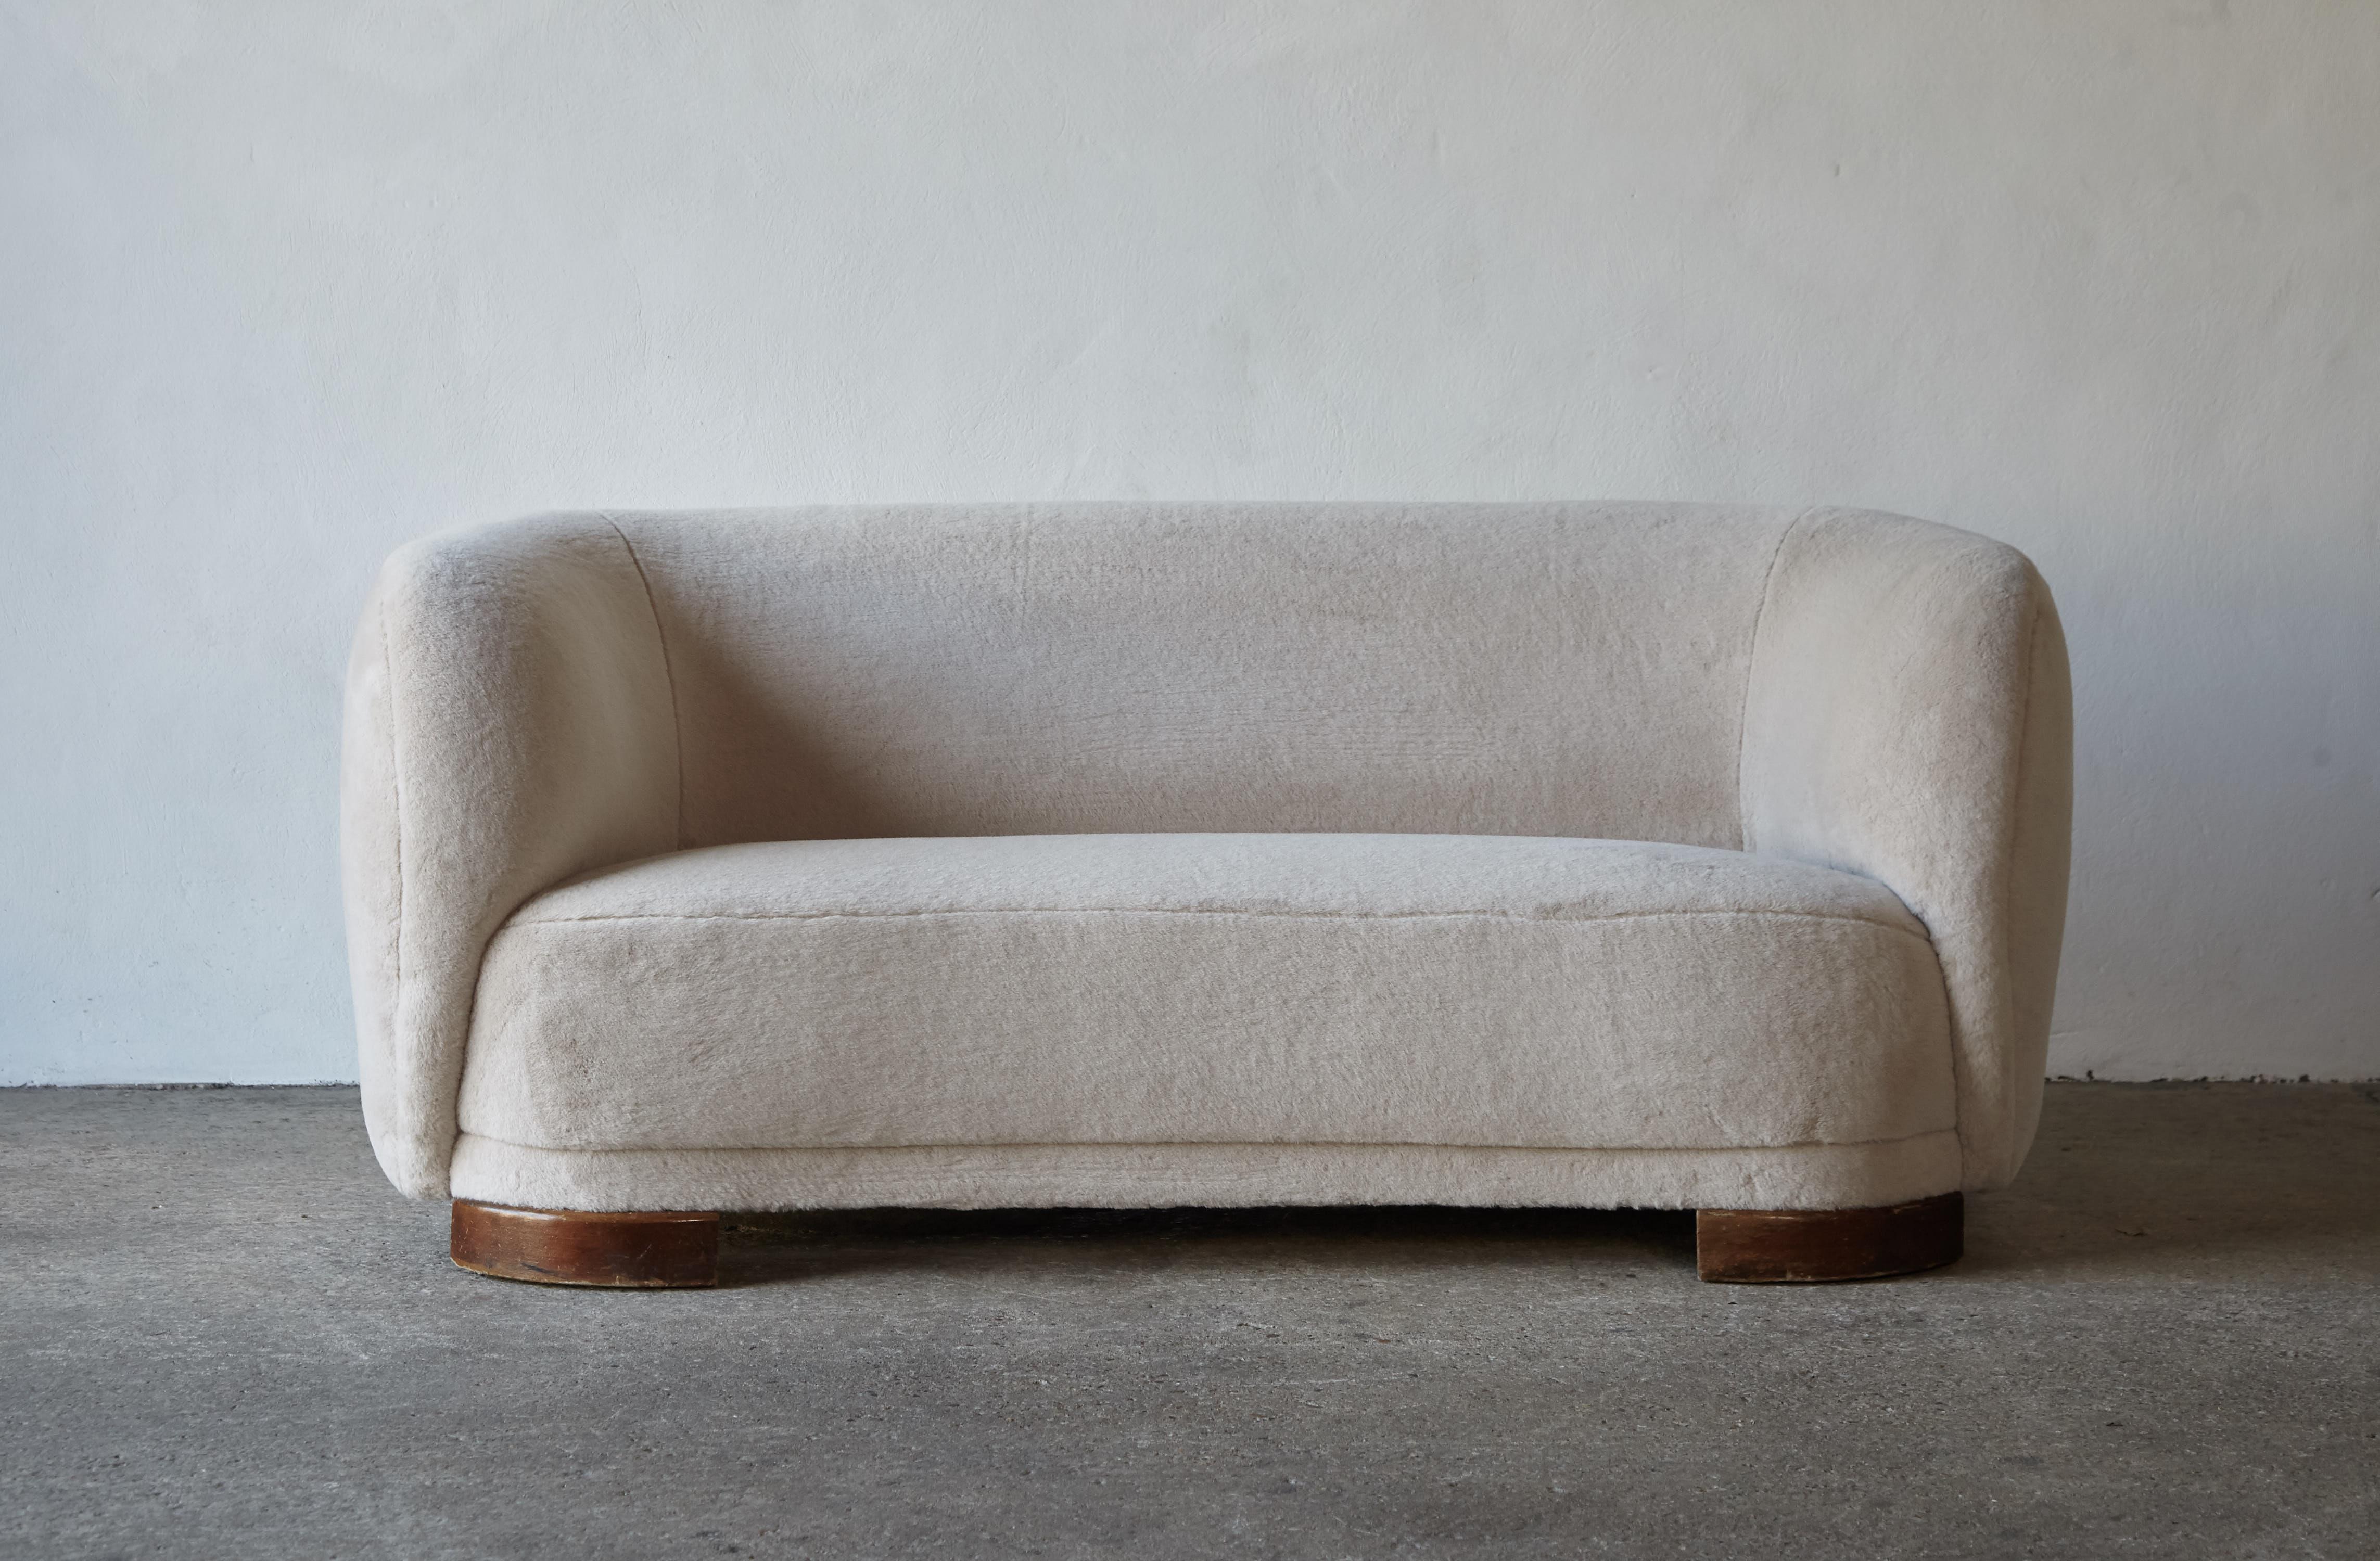 Mid-Century Modern 1940s Danish Cabinetmaker Sofa, Newly Upholstered in Alpaca